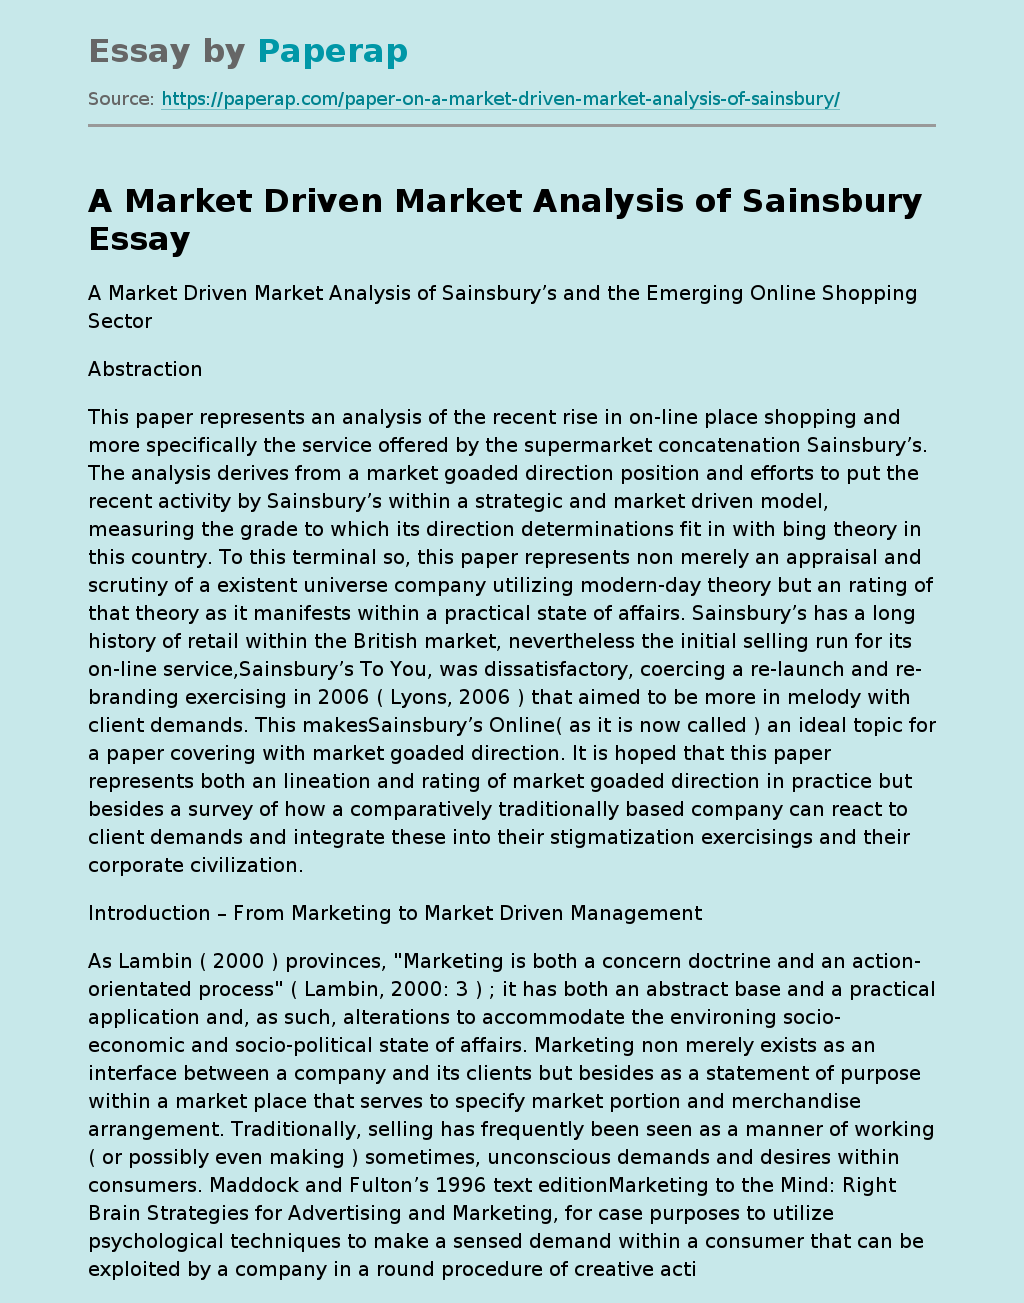 A Market Driven Market Analysis of Sainsbury